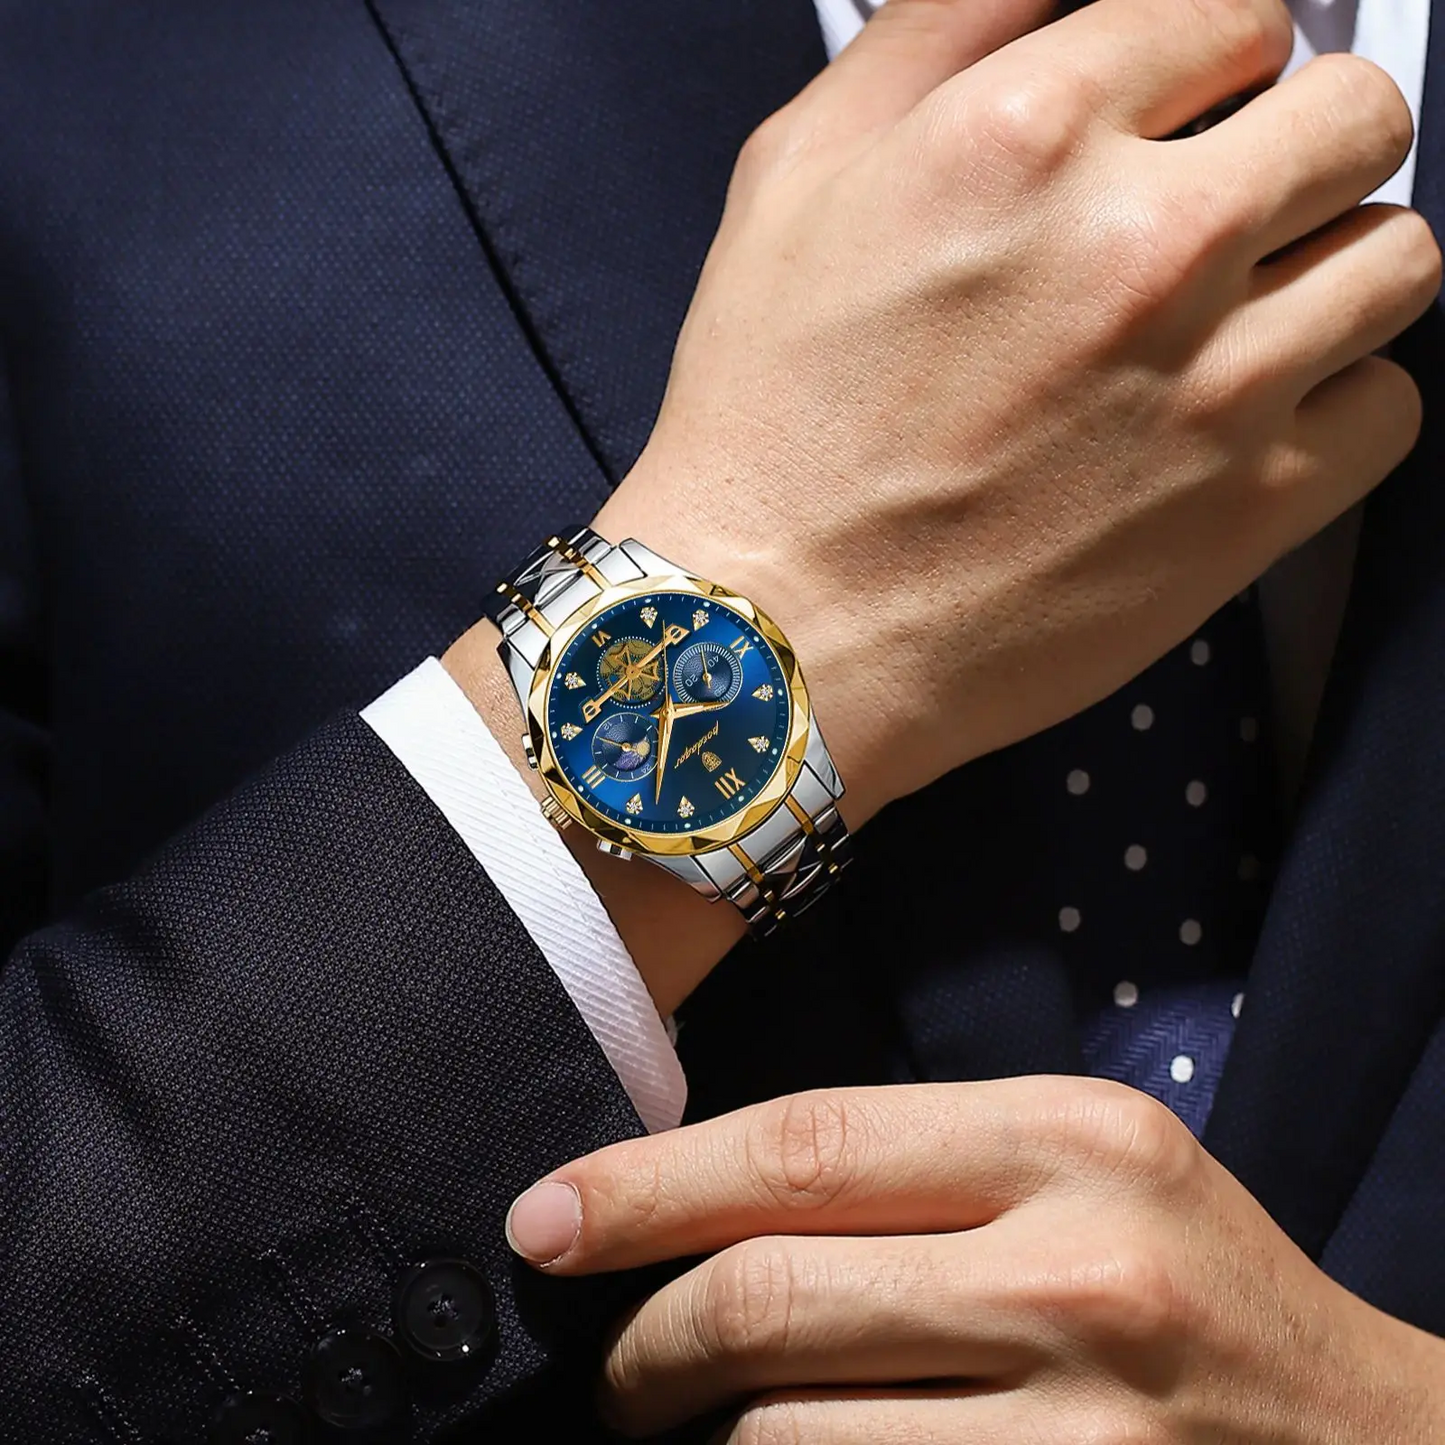 Relógio de pulso luxo masculino Poedagar, relógio cronógrafo luminoso impermeável, aço inoxidável, relógios quartzo